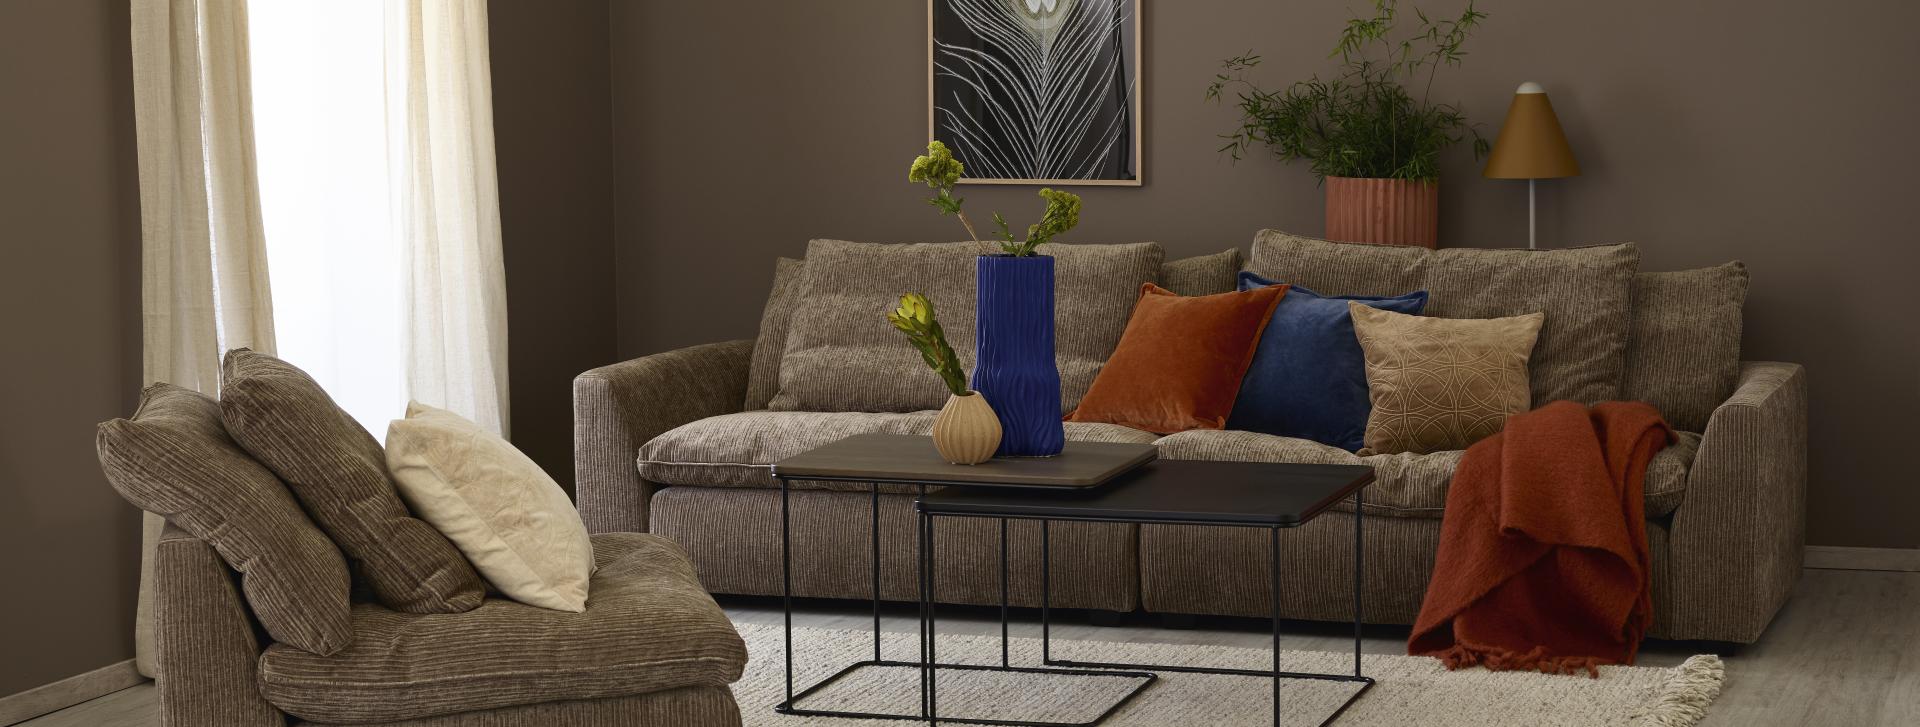 Brunmalt stue med brun sofa og fargerike puter